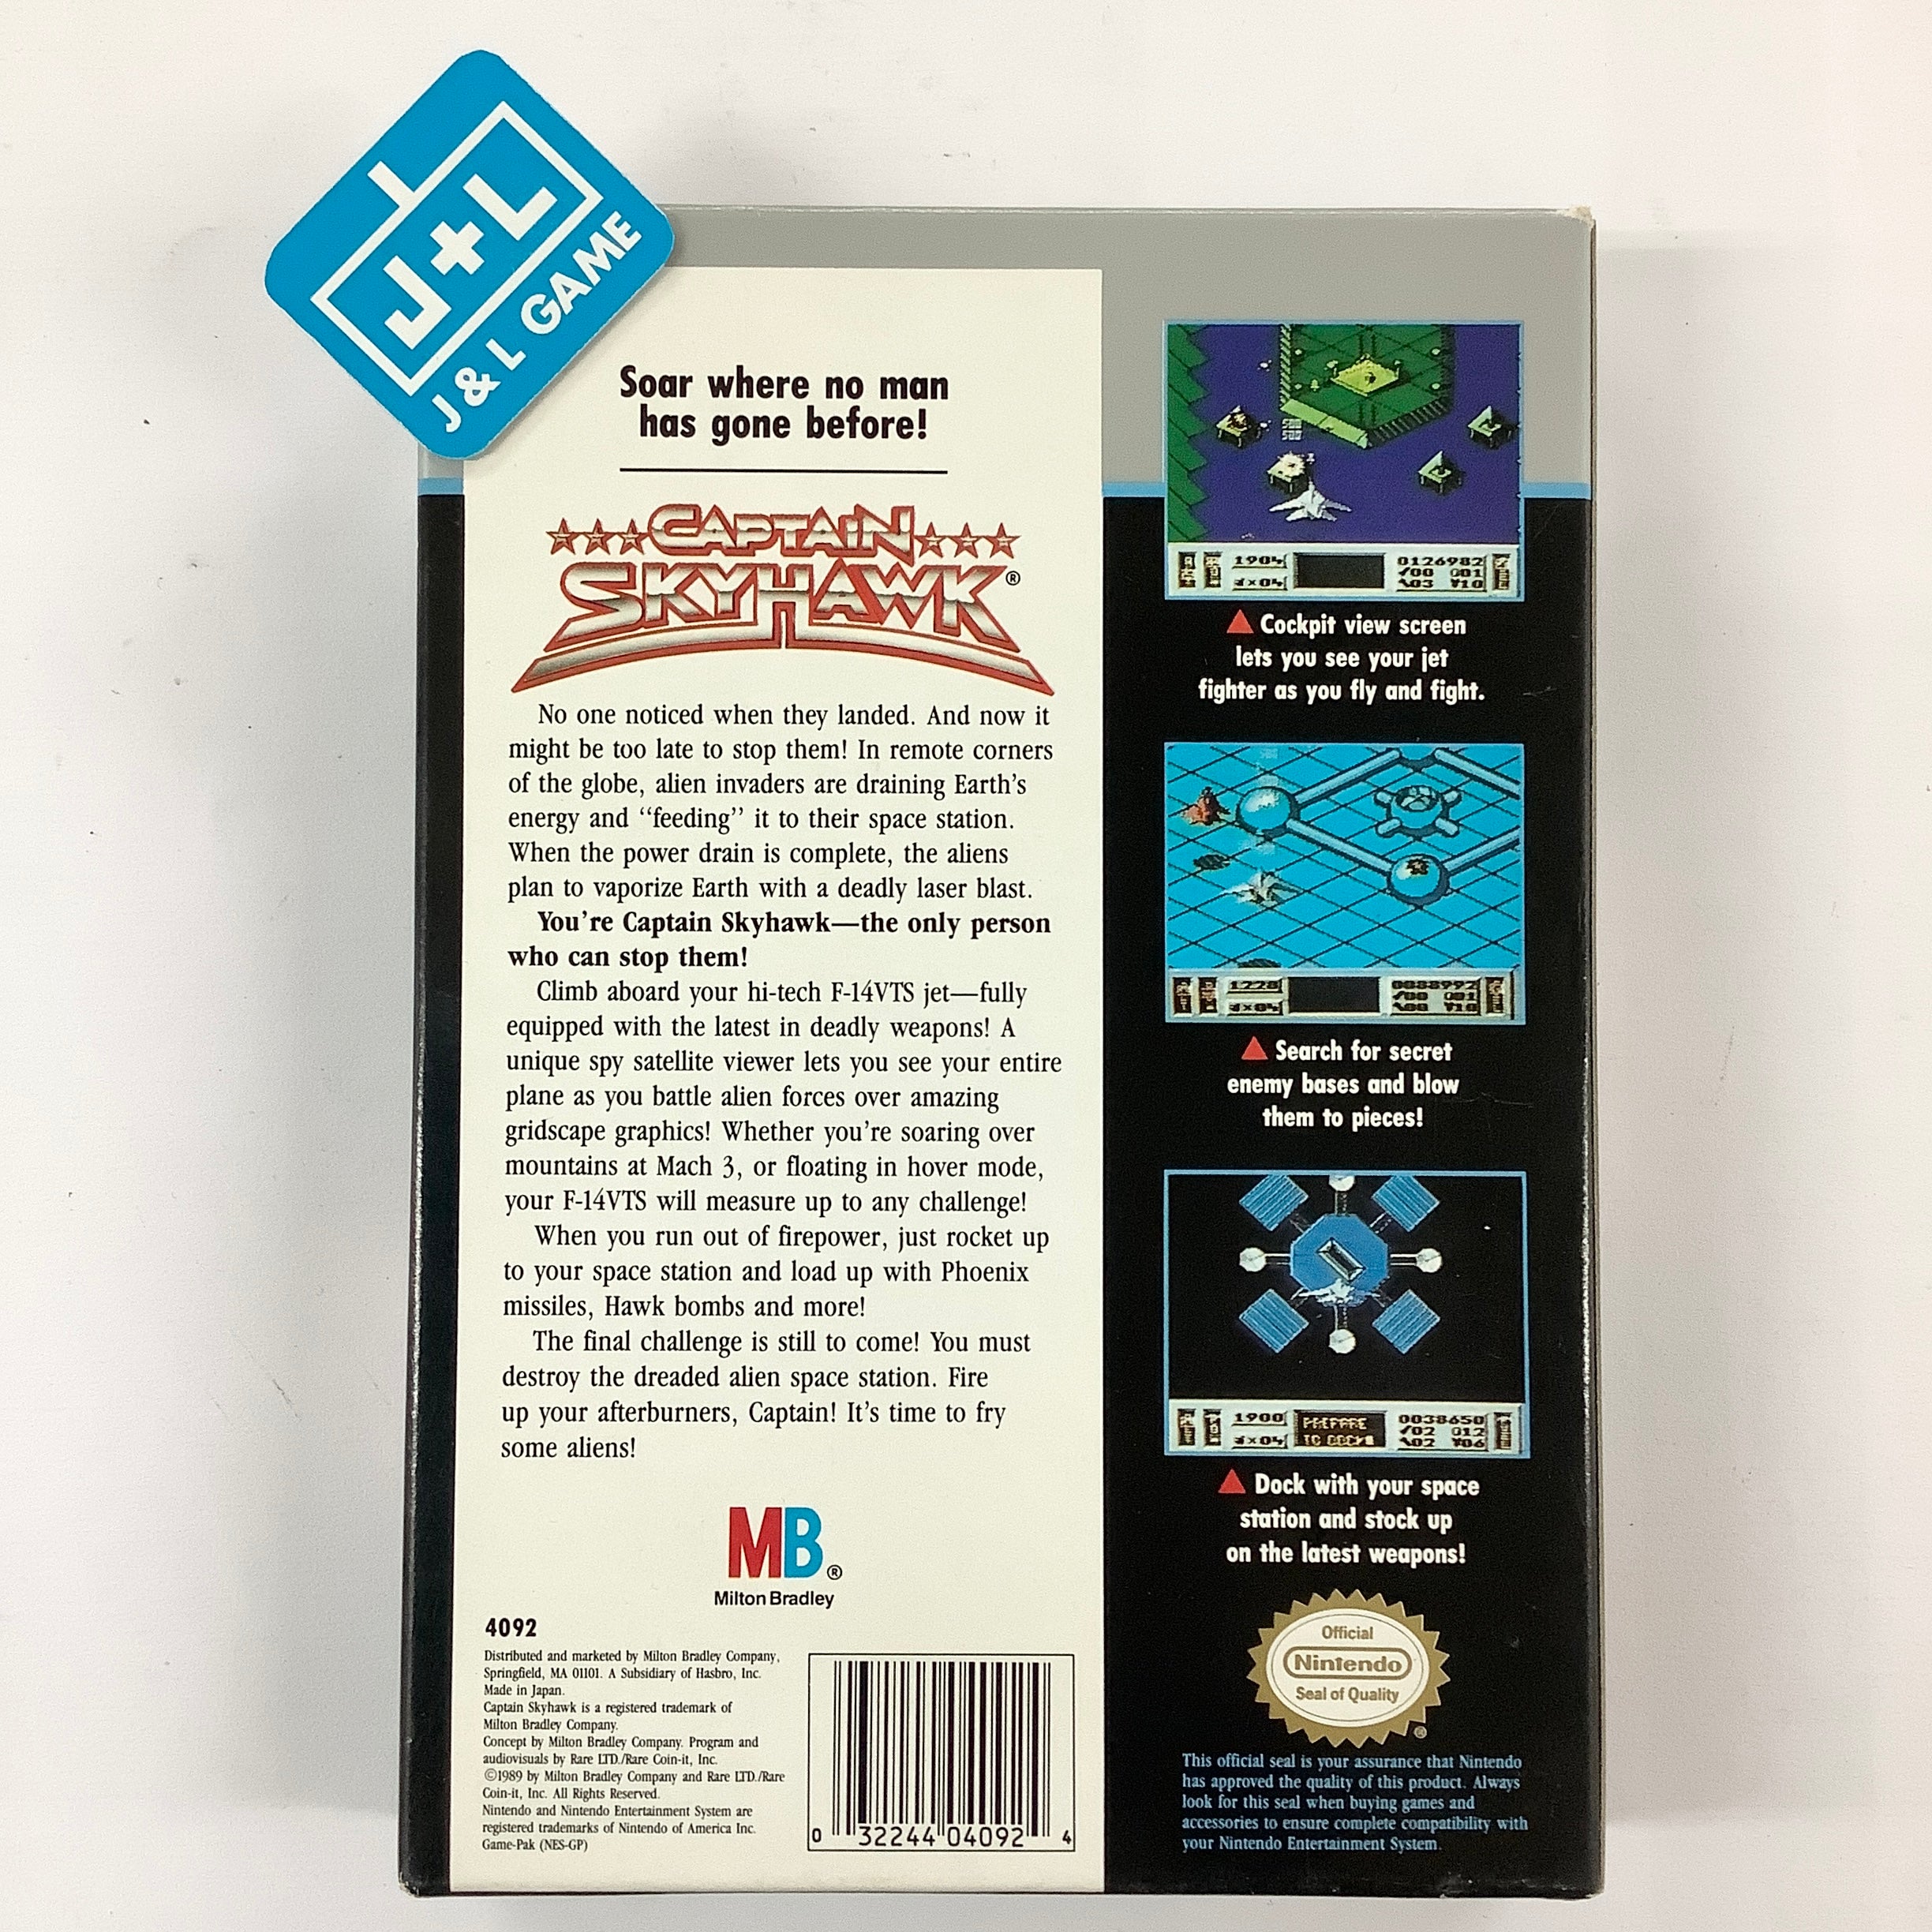 Captain Skyhawk - (NES) Nintendo Entertainment System [Pre-Owned] Video Games Milton Bradley   